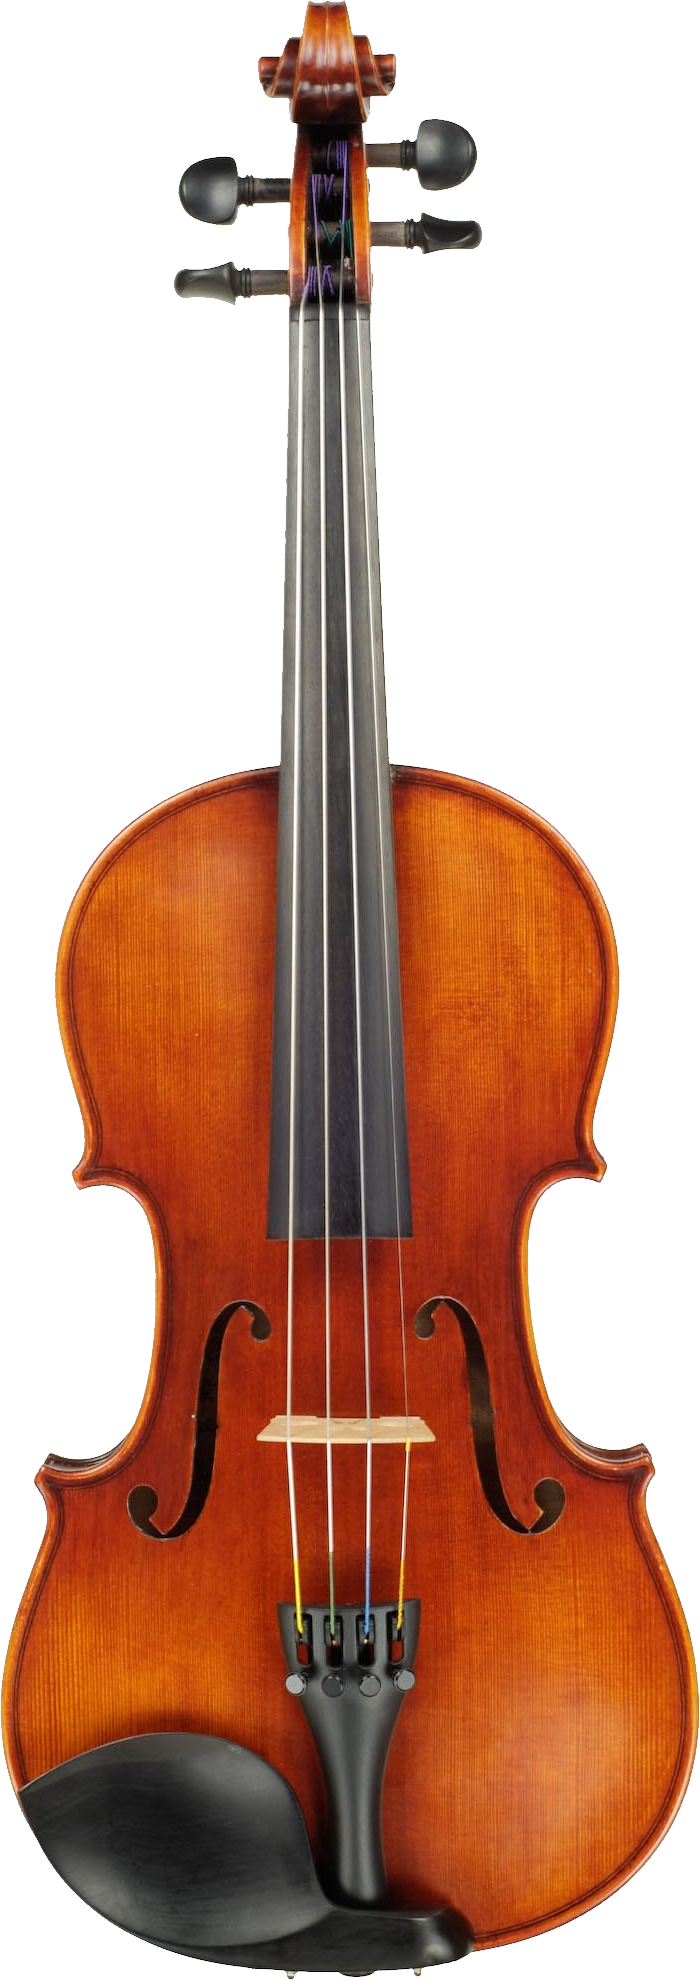 Musical violin instrument wood png #29905